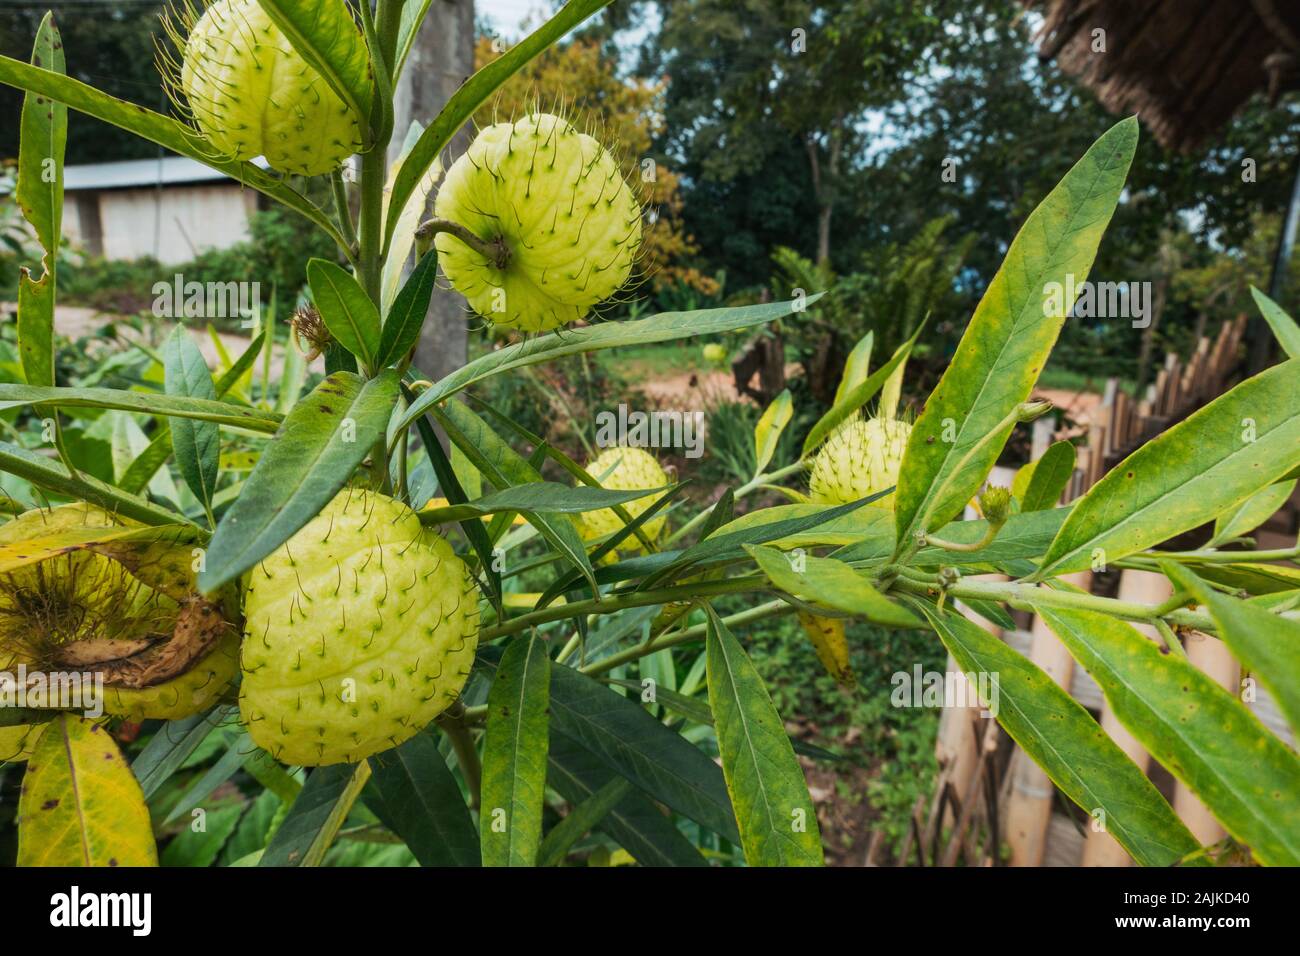 The spiky green hairy balls of a balloon plant, gomphocarpus physocarpus, growing in Thailand Stock Photo